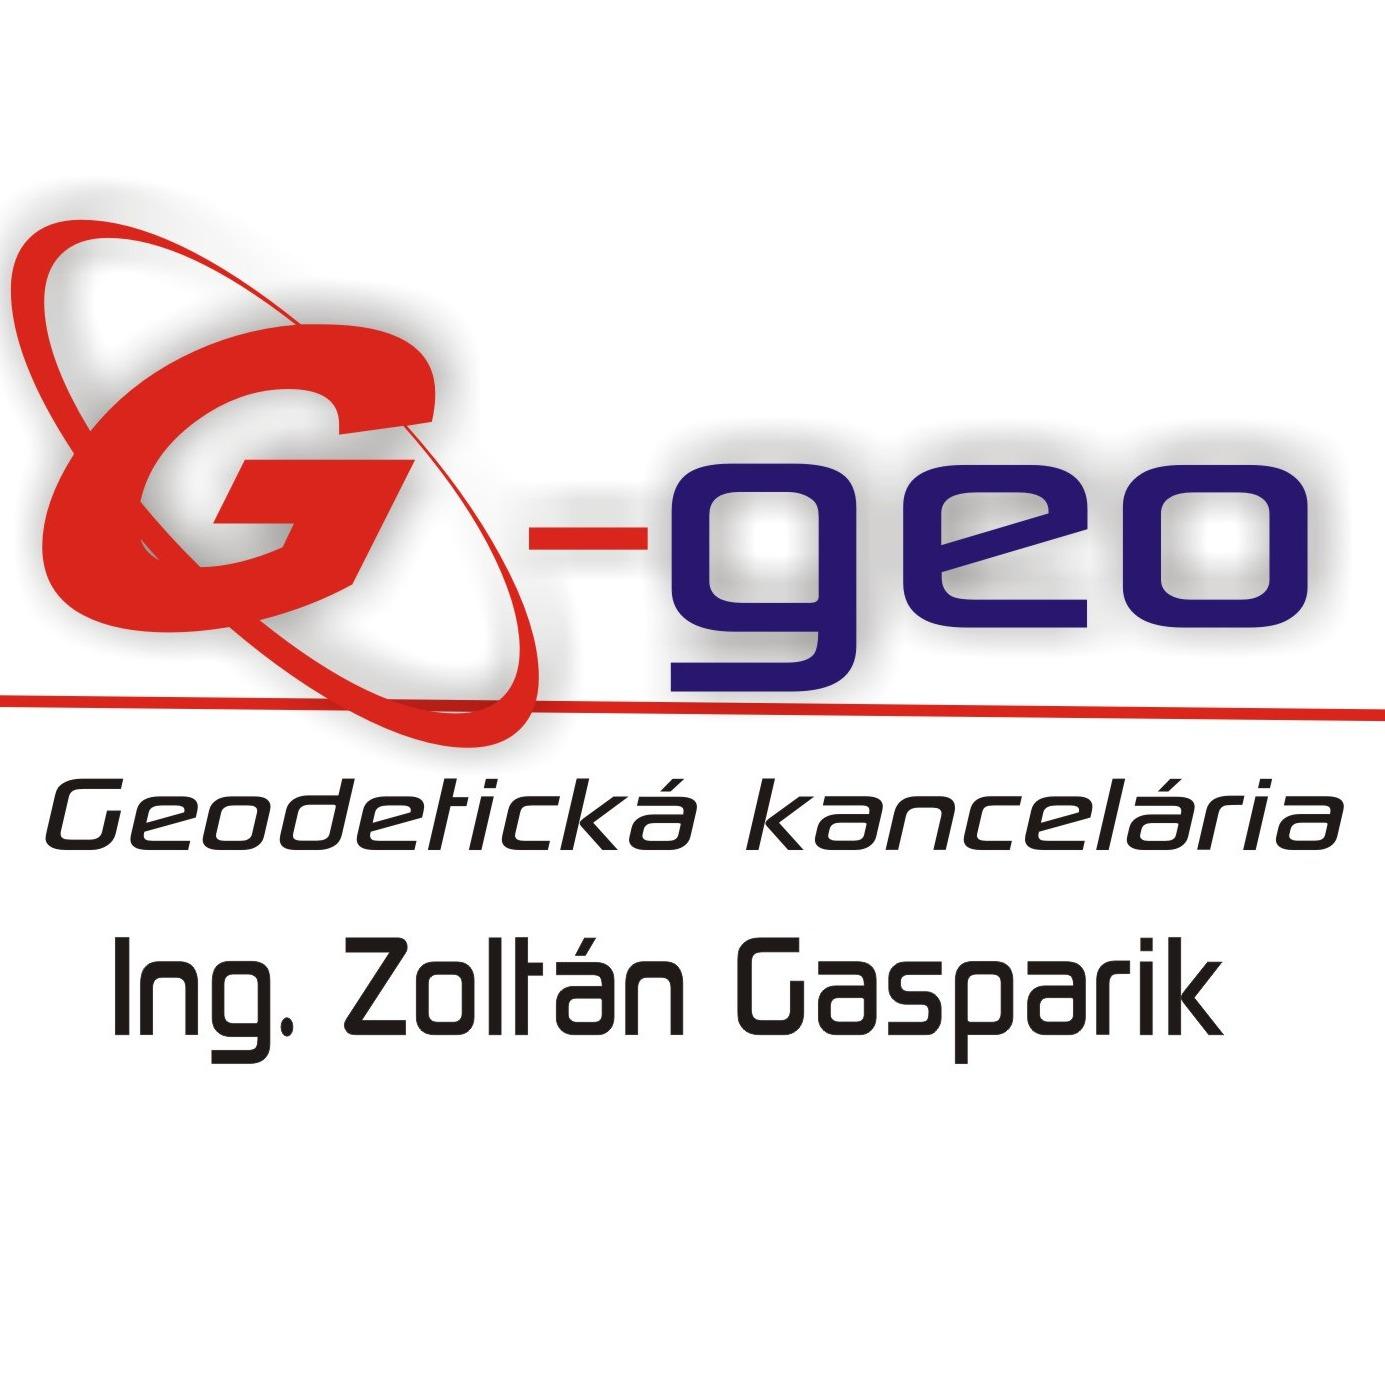 Ing. Zoltán Gasparik G-geo